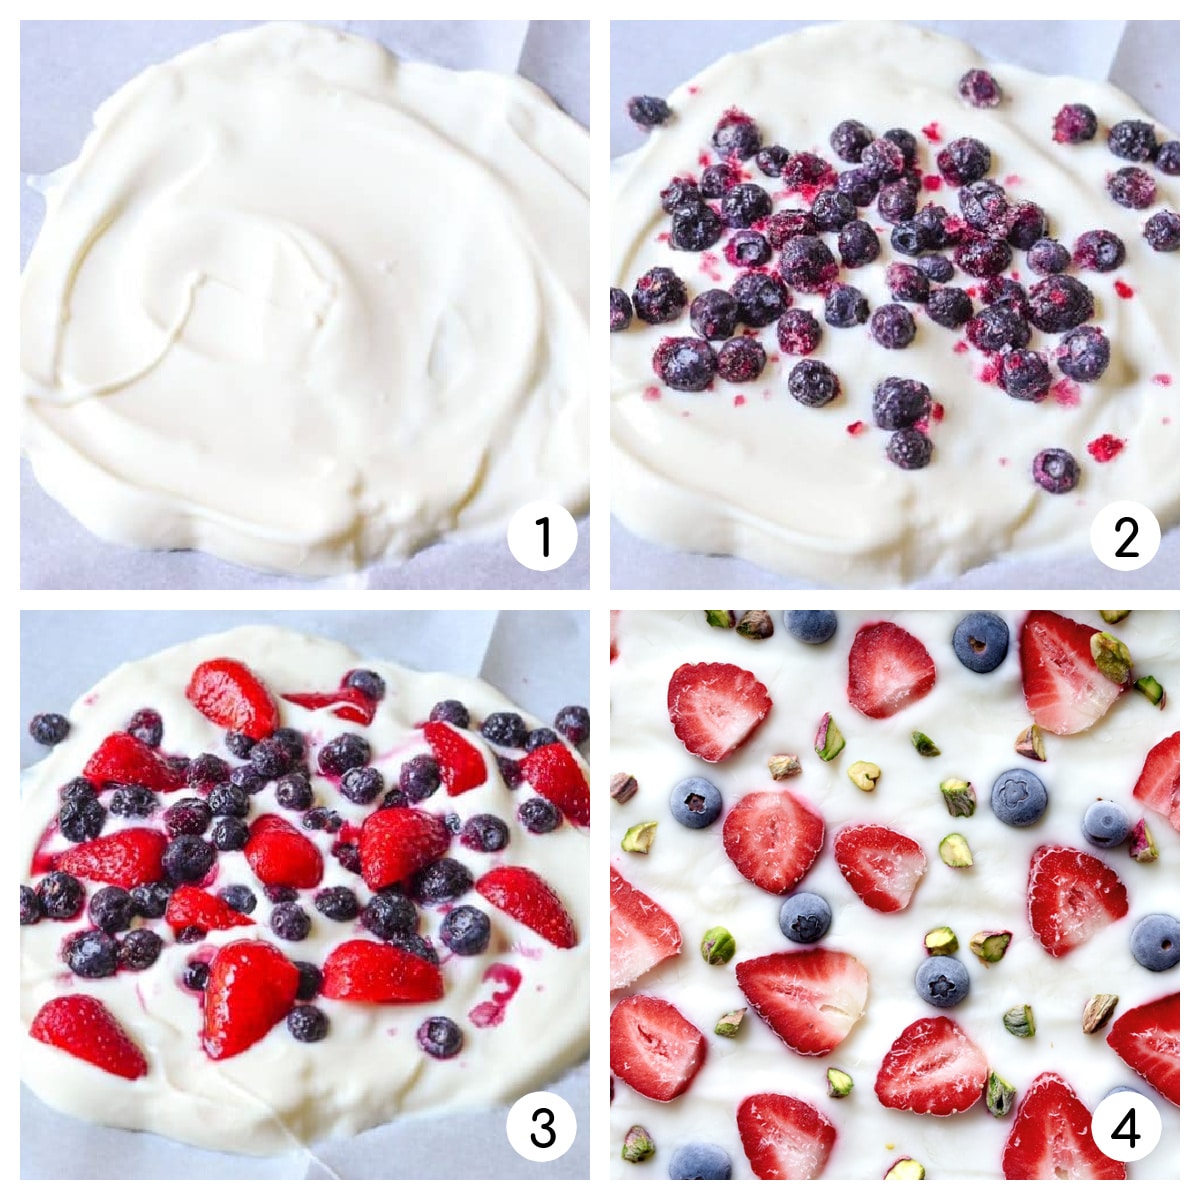 4 steps for making frozen yogurt with Greek yogurt, strawberries, blueberries and pistachios